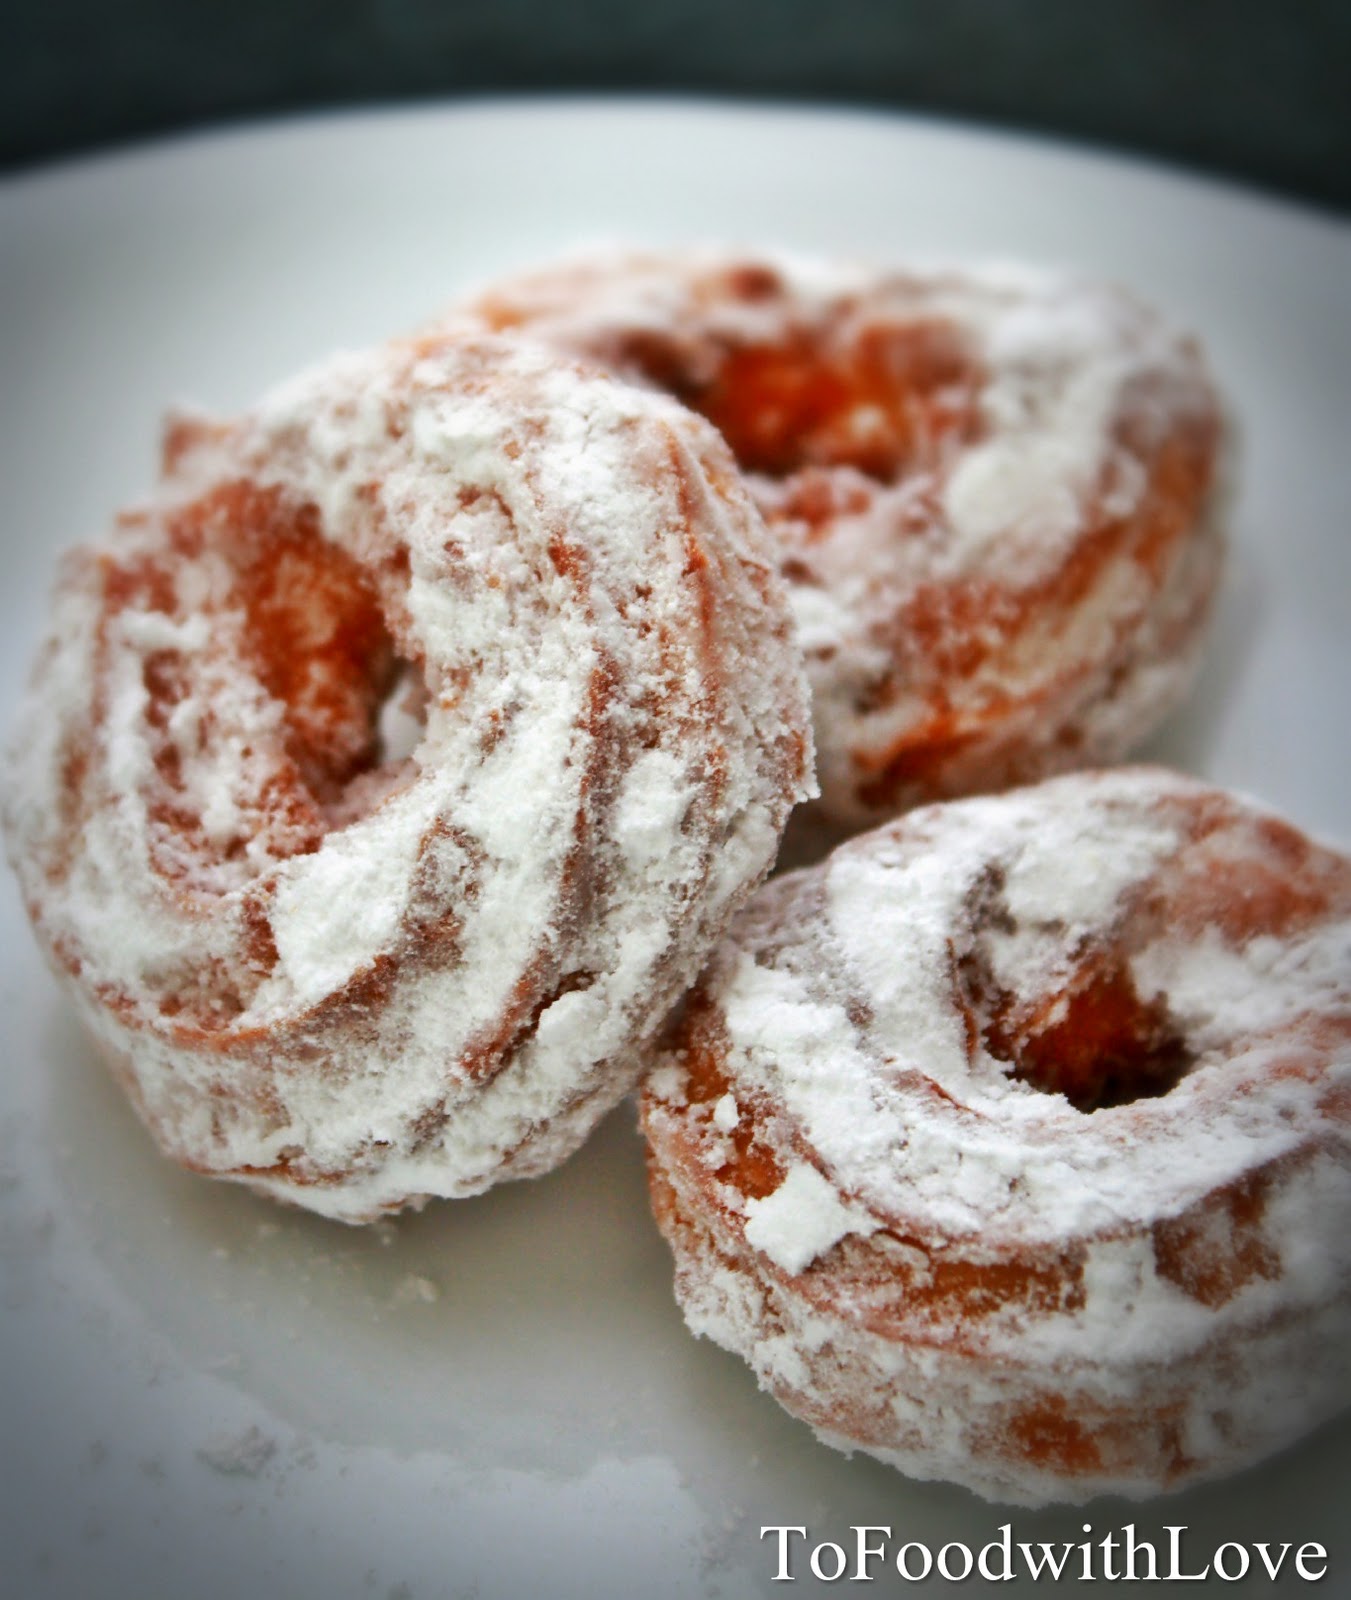 To Food with Love: Kuih Keria (Sweet Potato Donuts)